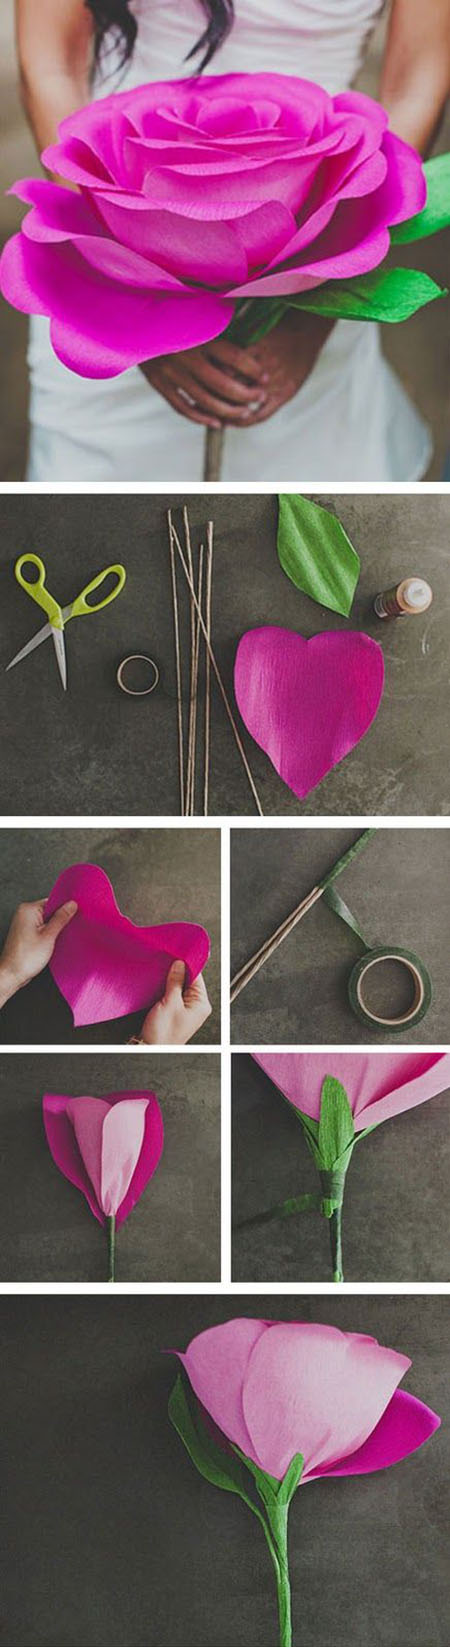 14 DIY Paper flowers11fdc